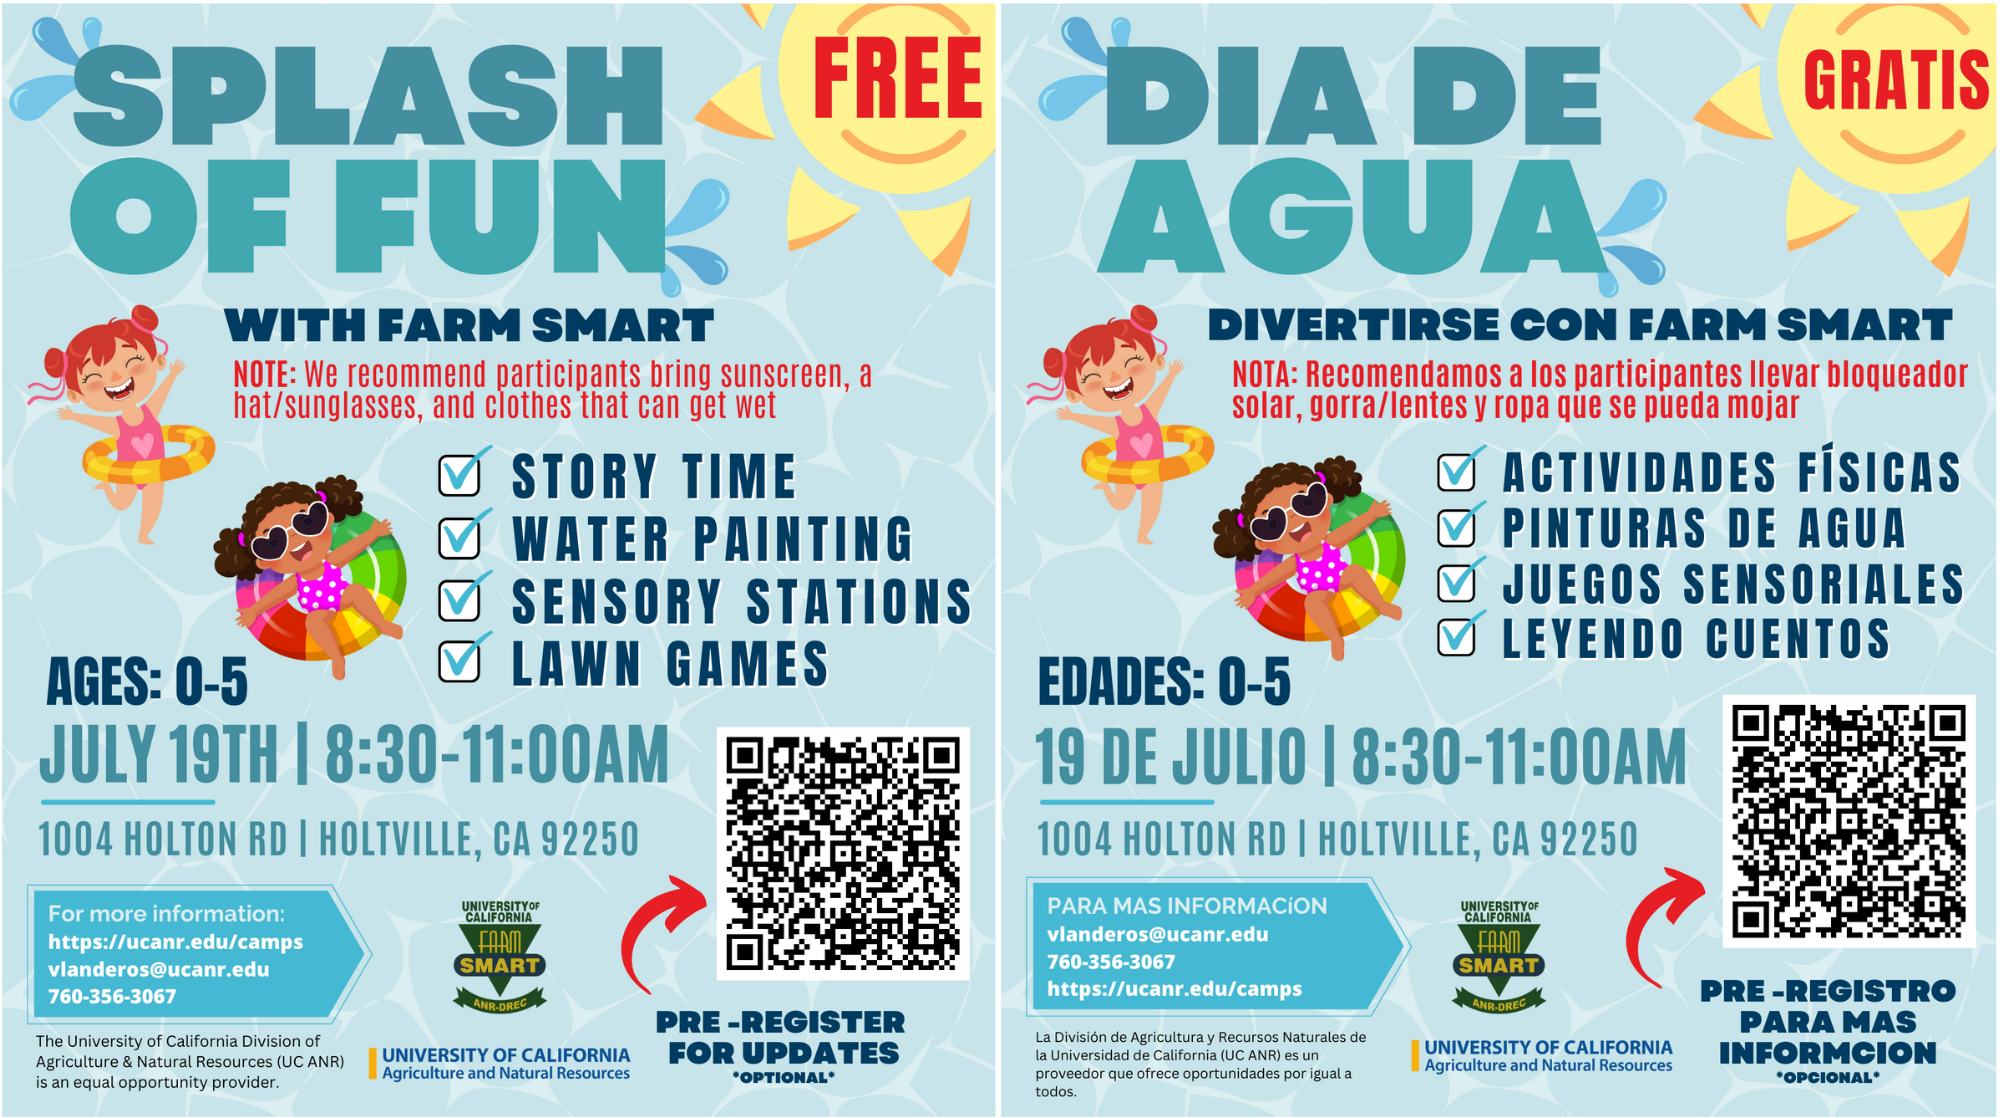 Splash of Fun flyer in english and spanish